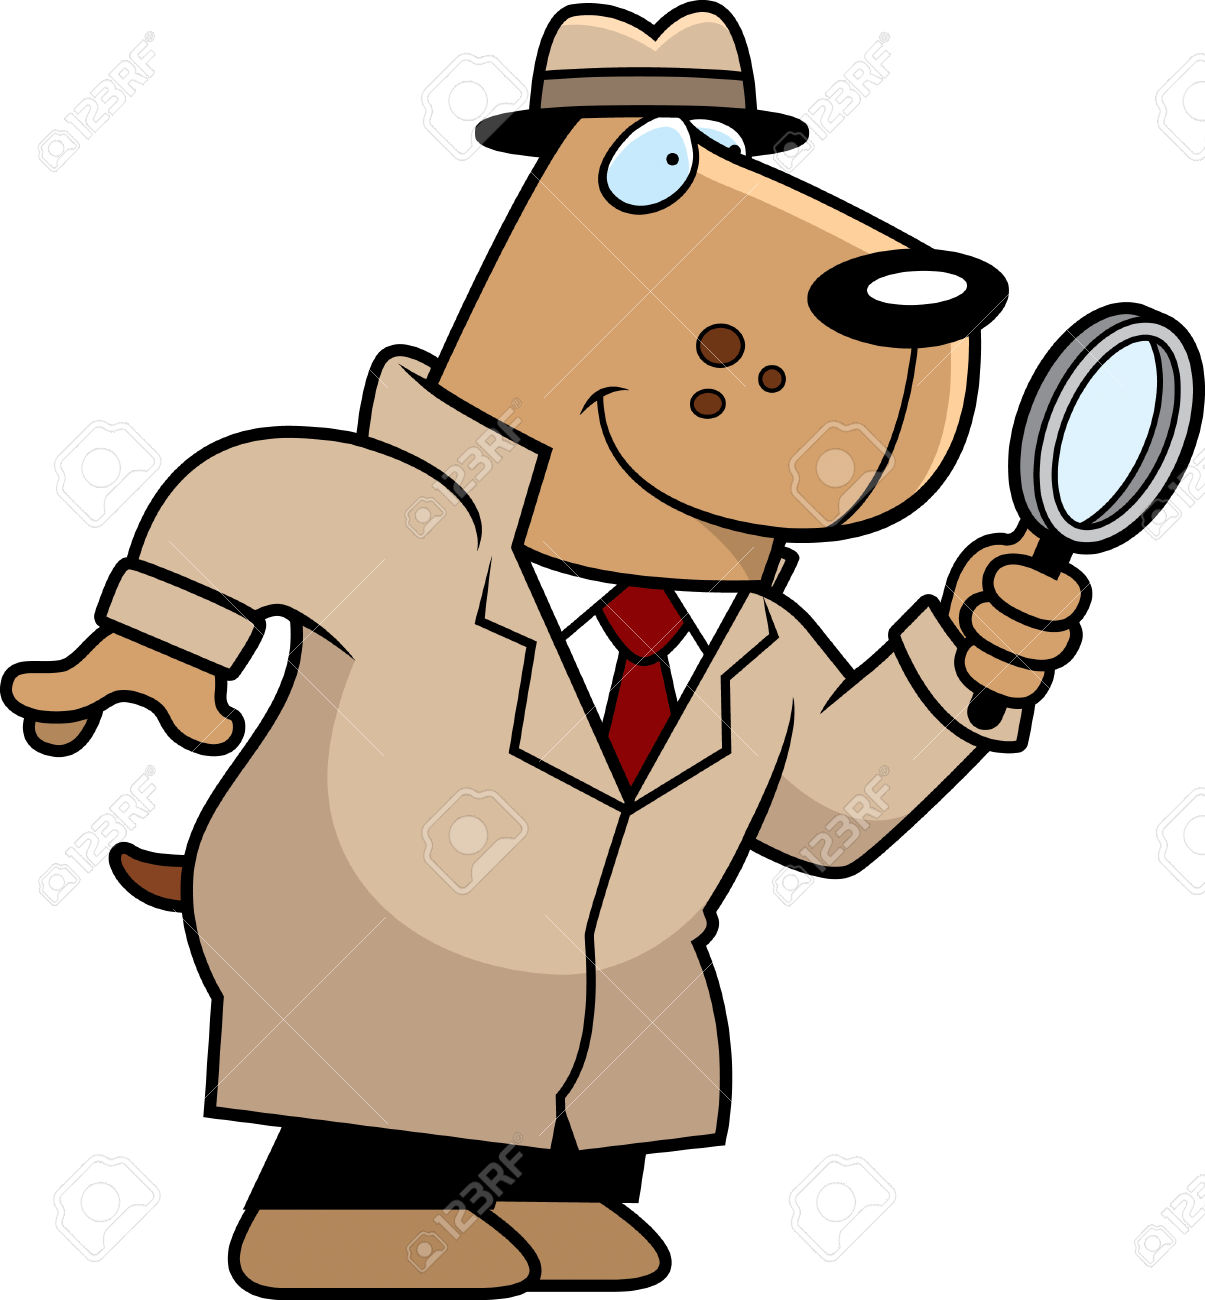 Dog detective clipart.